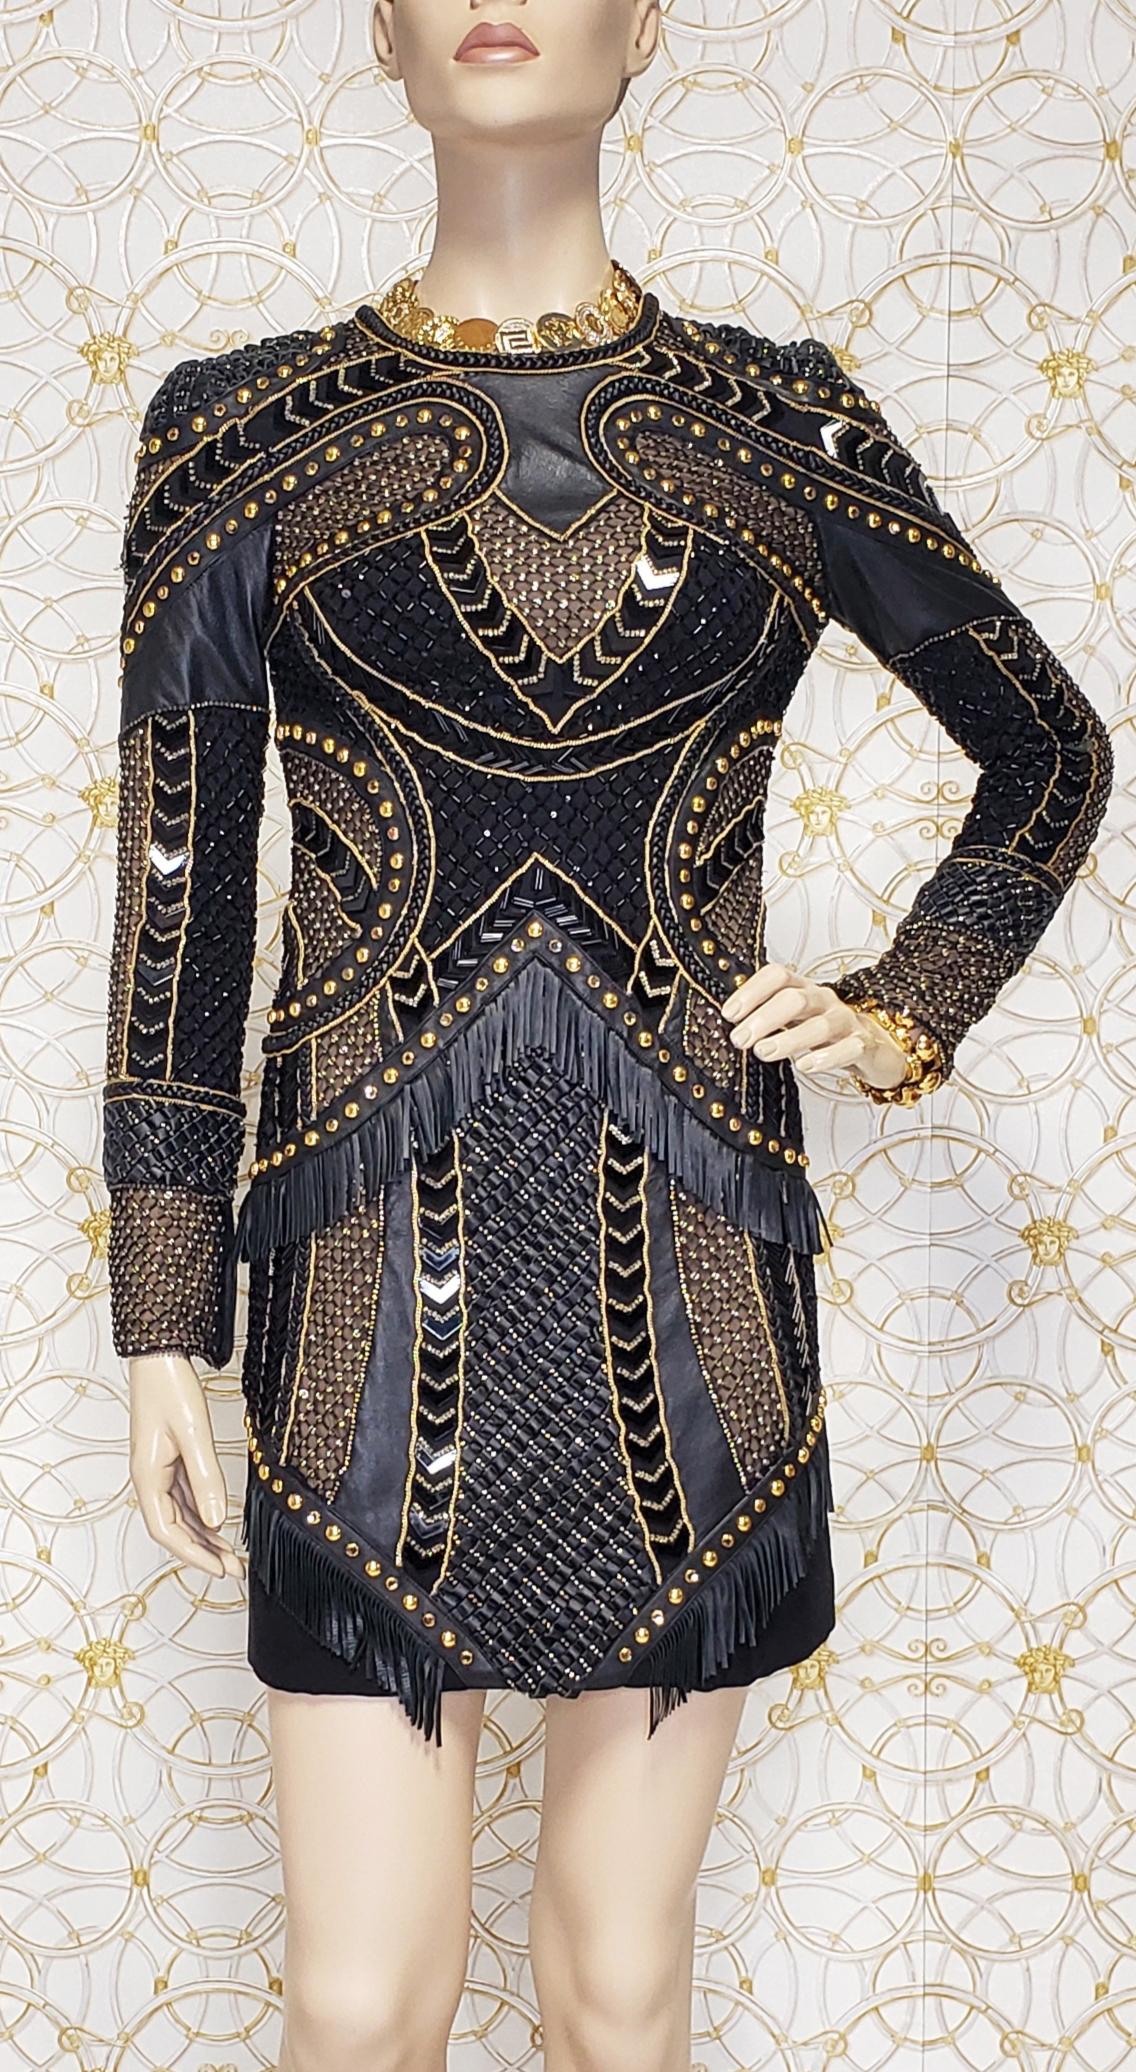 New Versace Crystal and Stud Embellished Leather Dress w/ Fringe 5